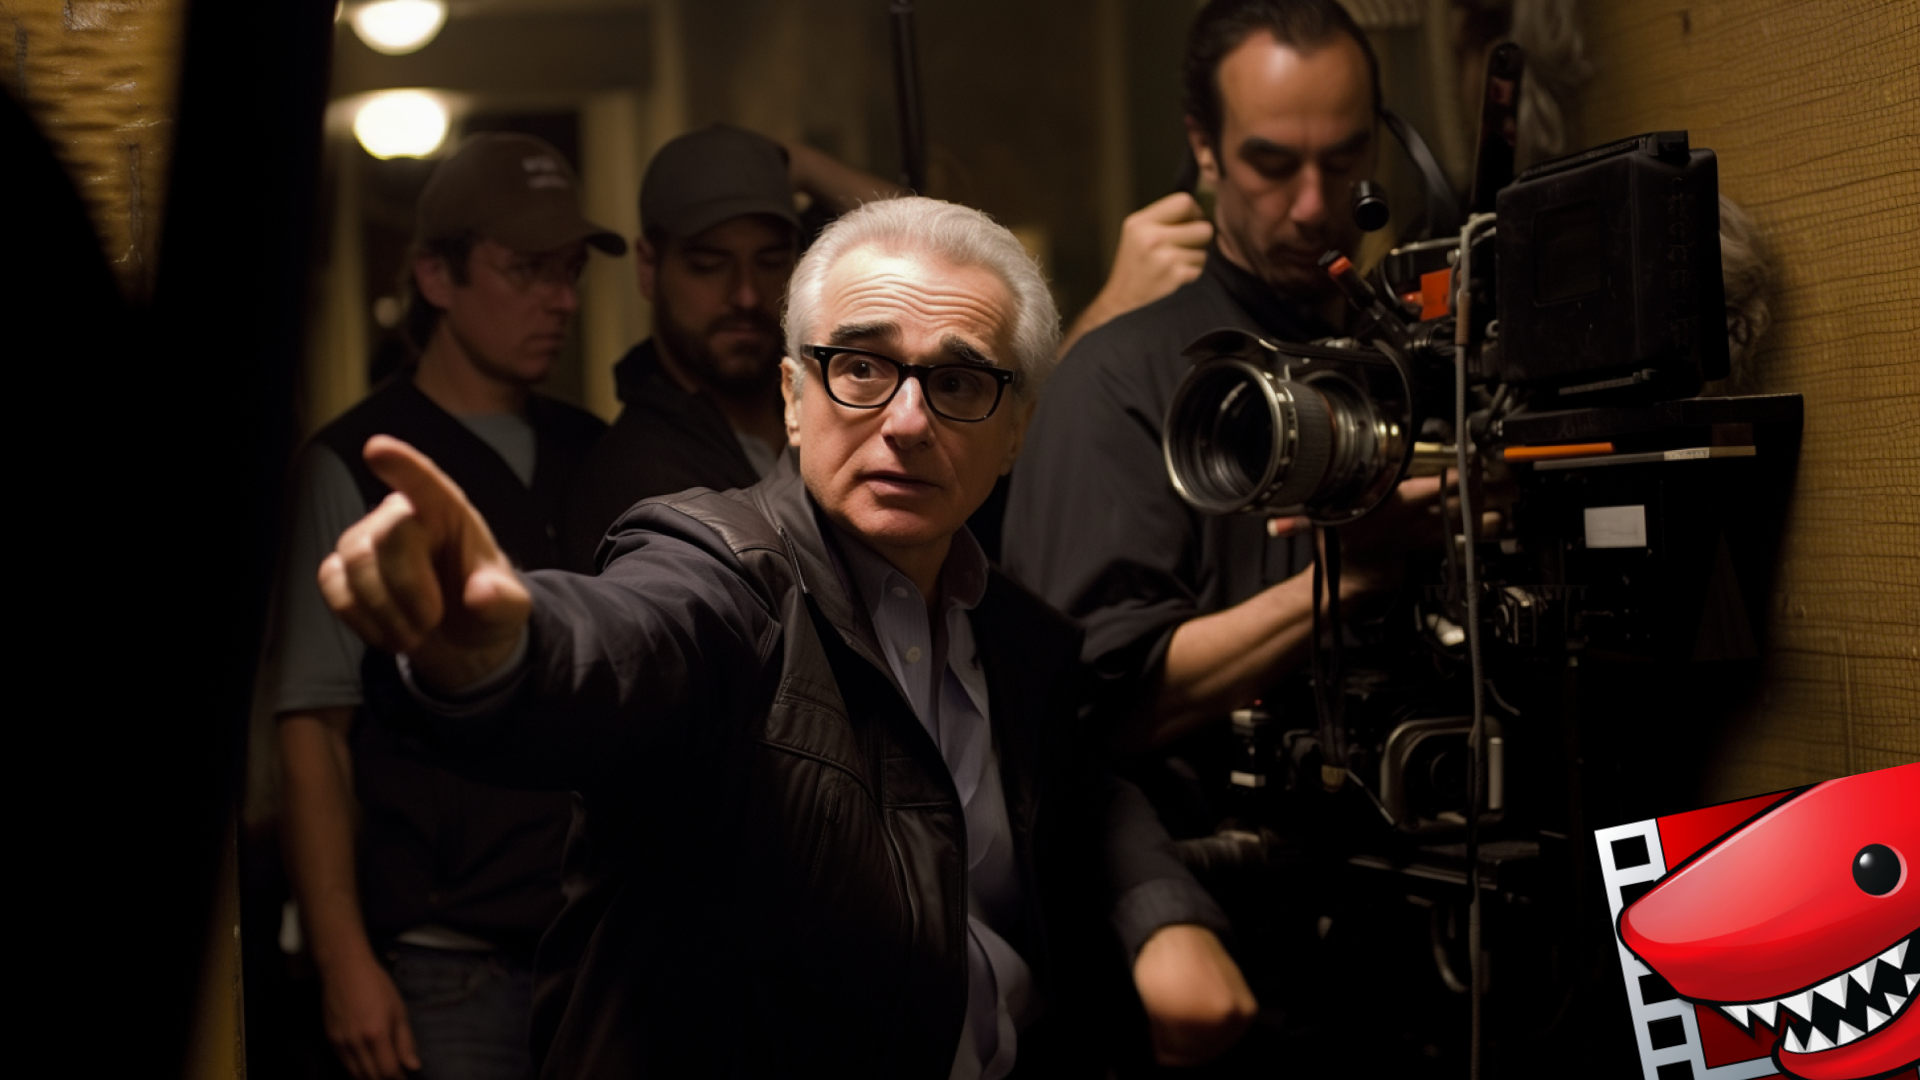 Scorsese on set directing a film